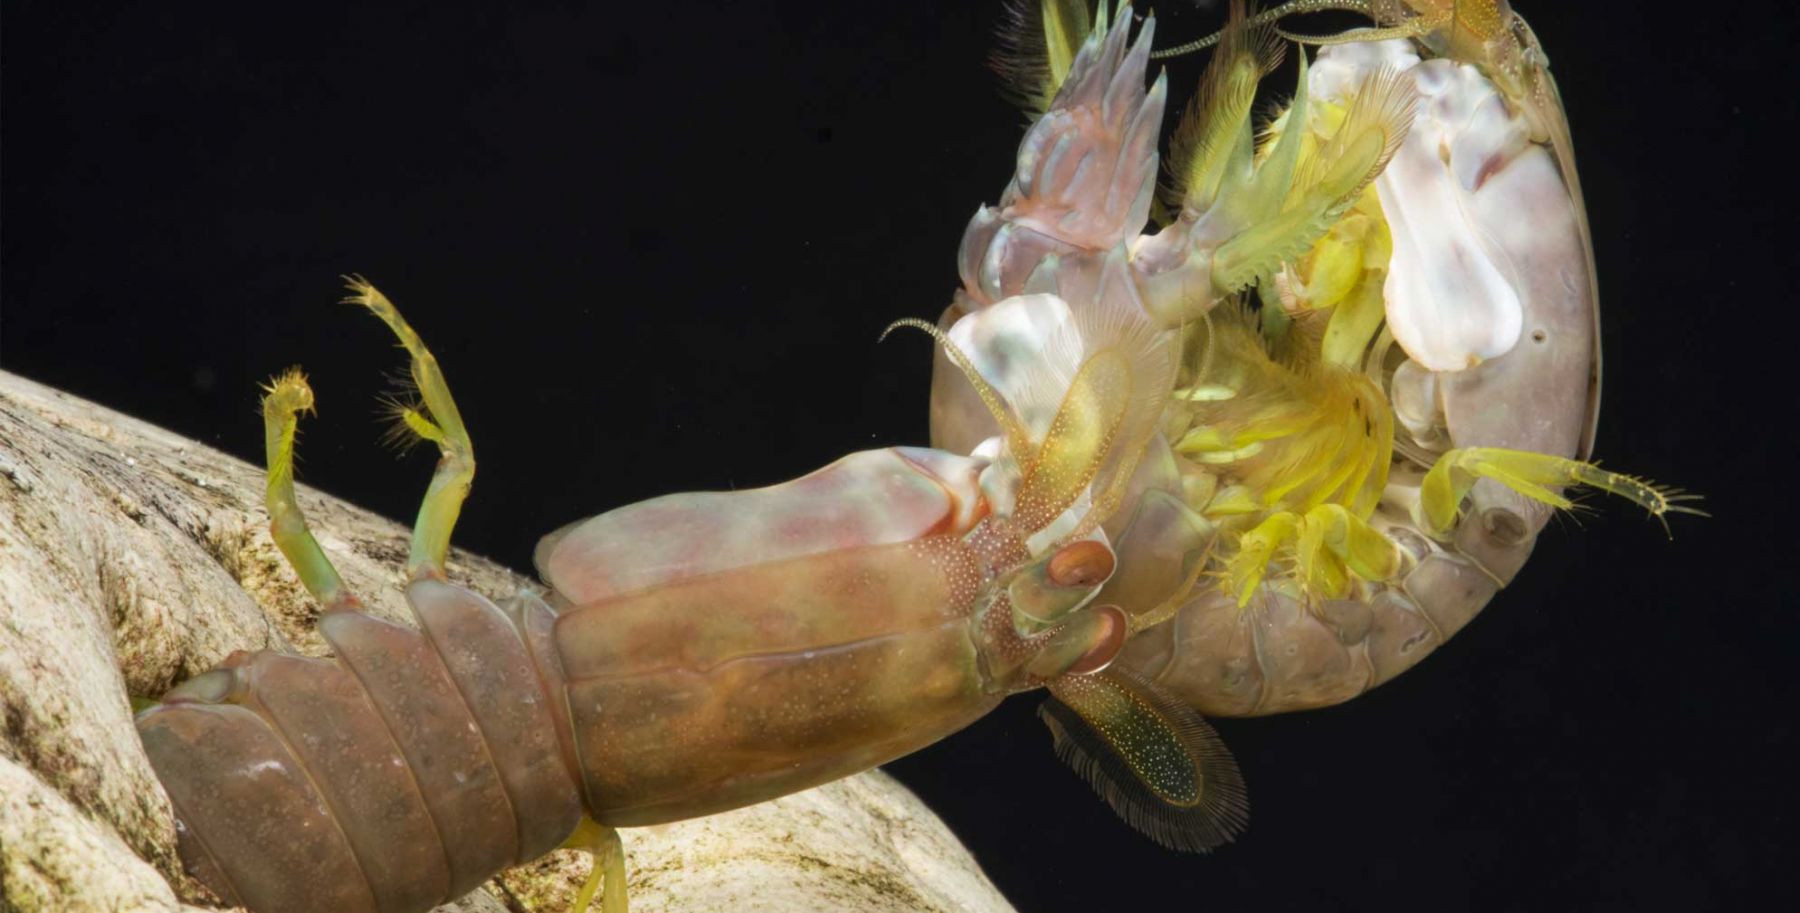 Mantis shrimp striking. Credit: Roy Caldwell